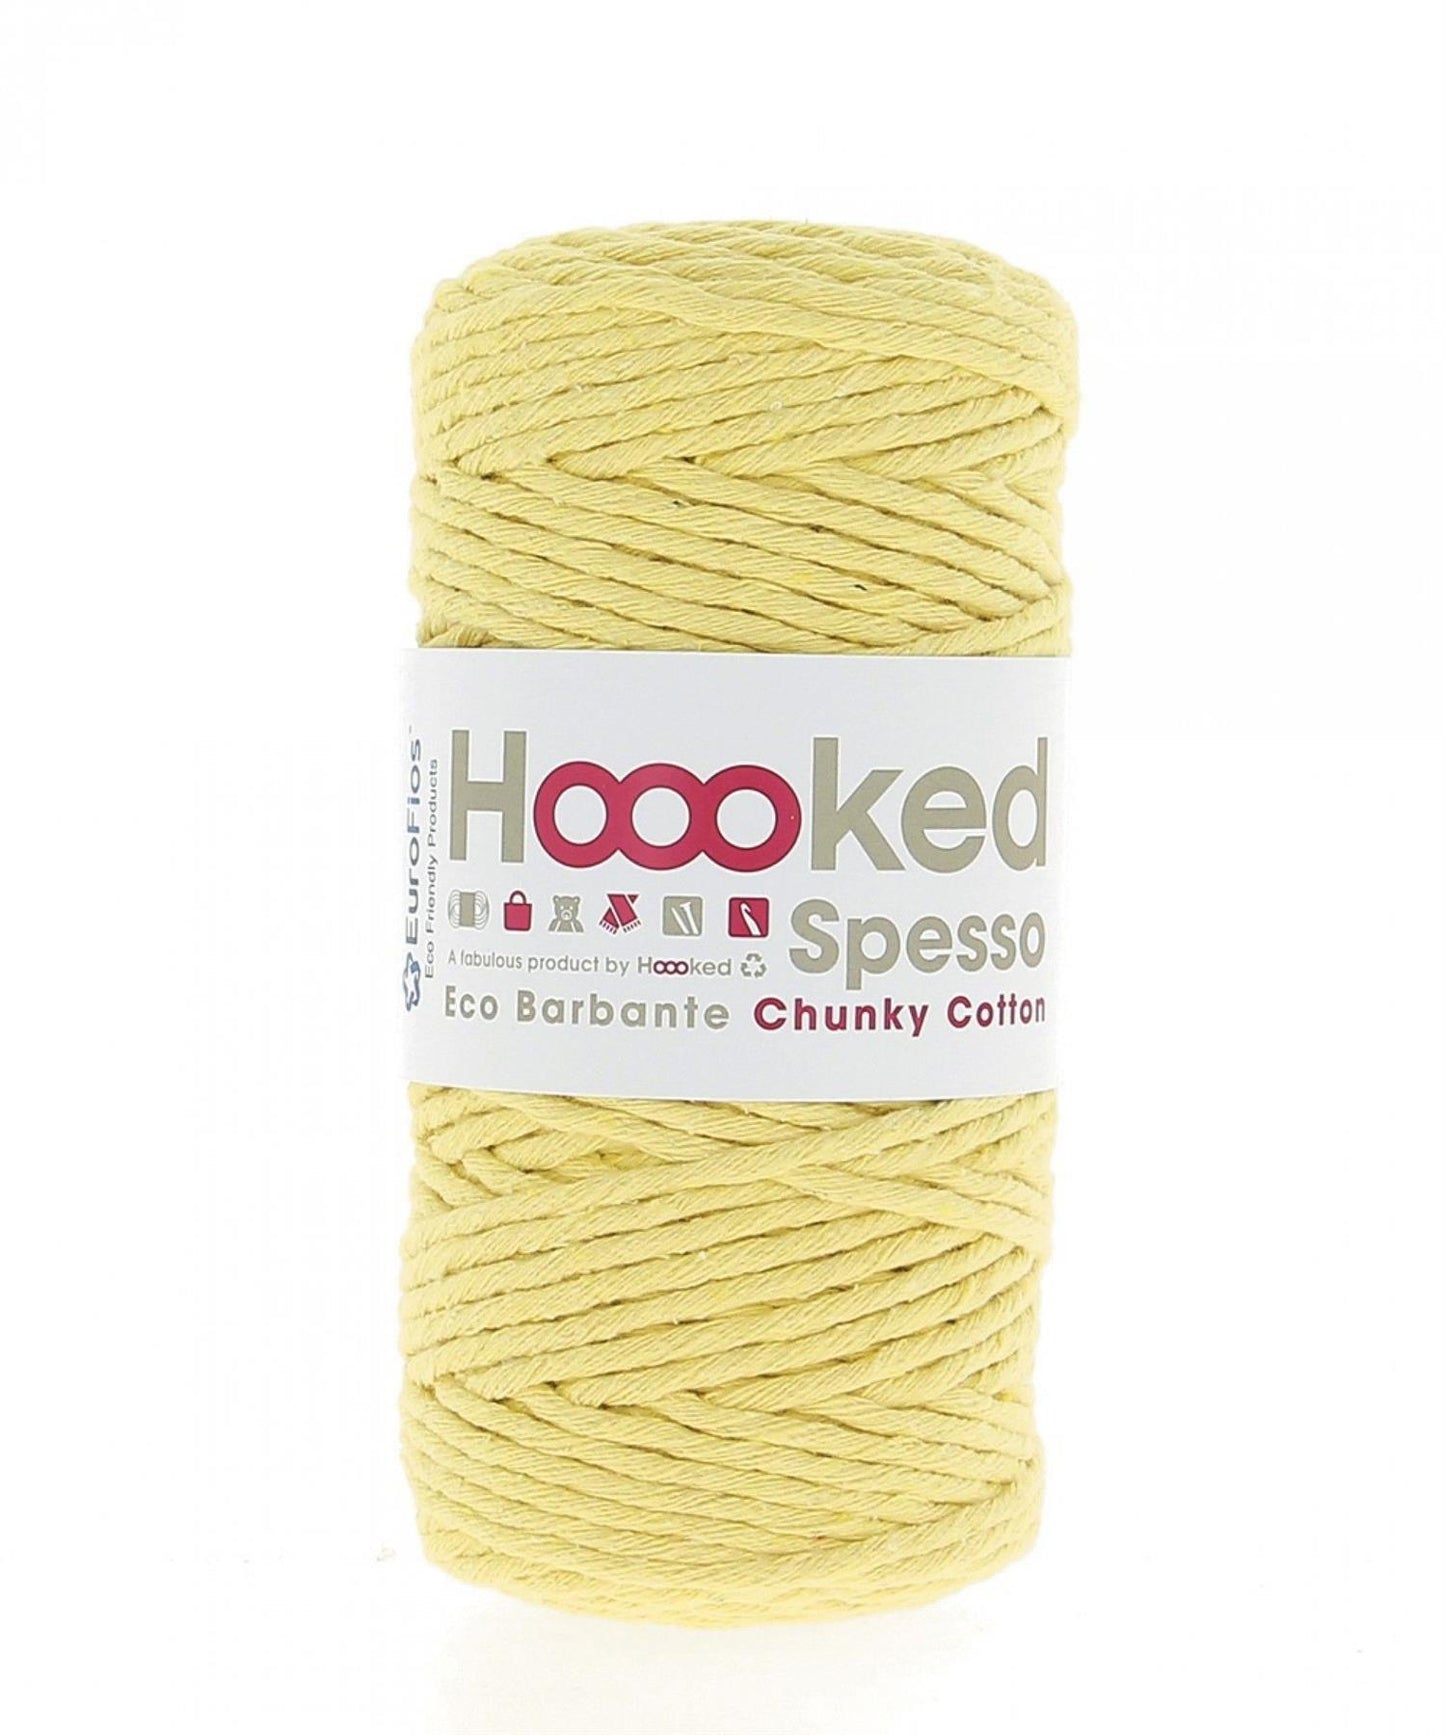 [Hoooked] S400 Spesso Chunky Popcorn Yellow Cotton Yarn - 127M, 500g